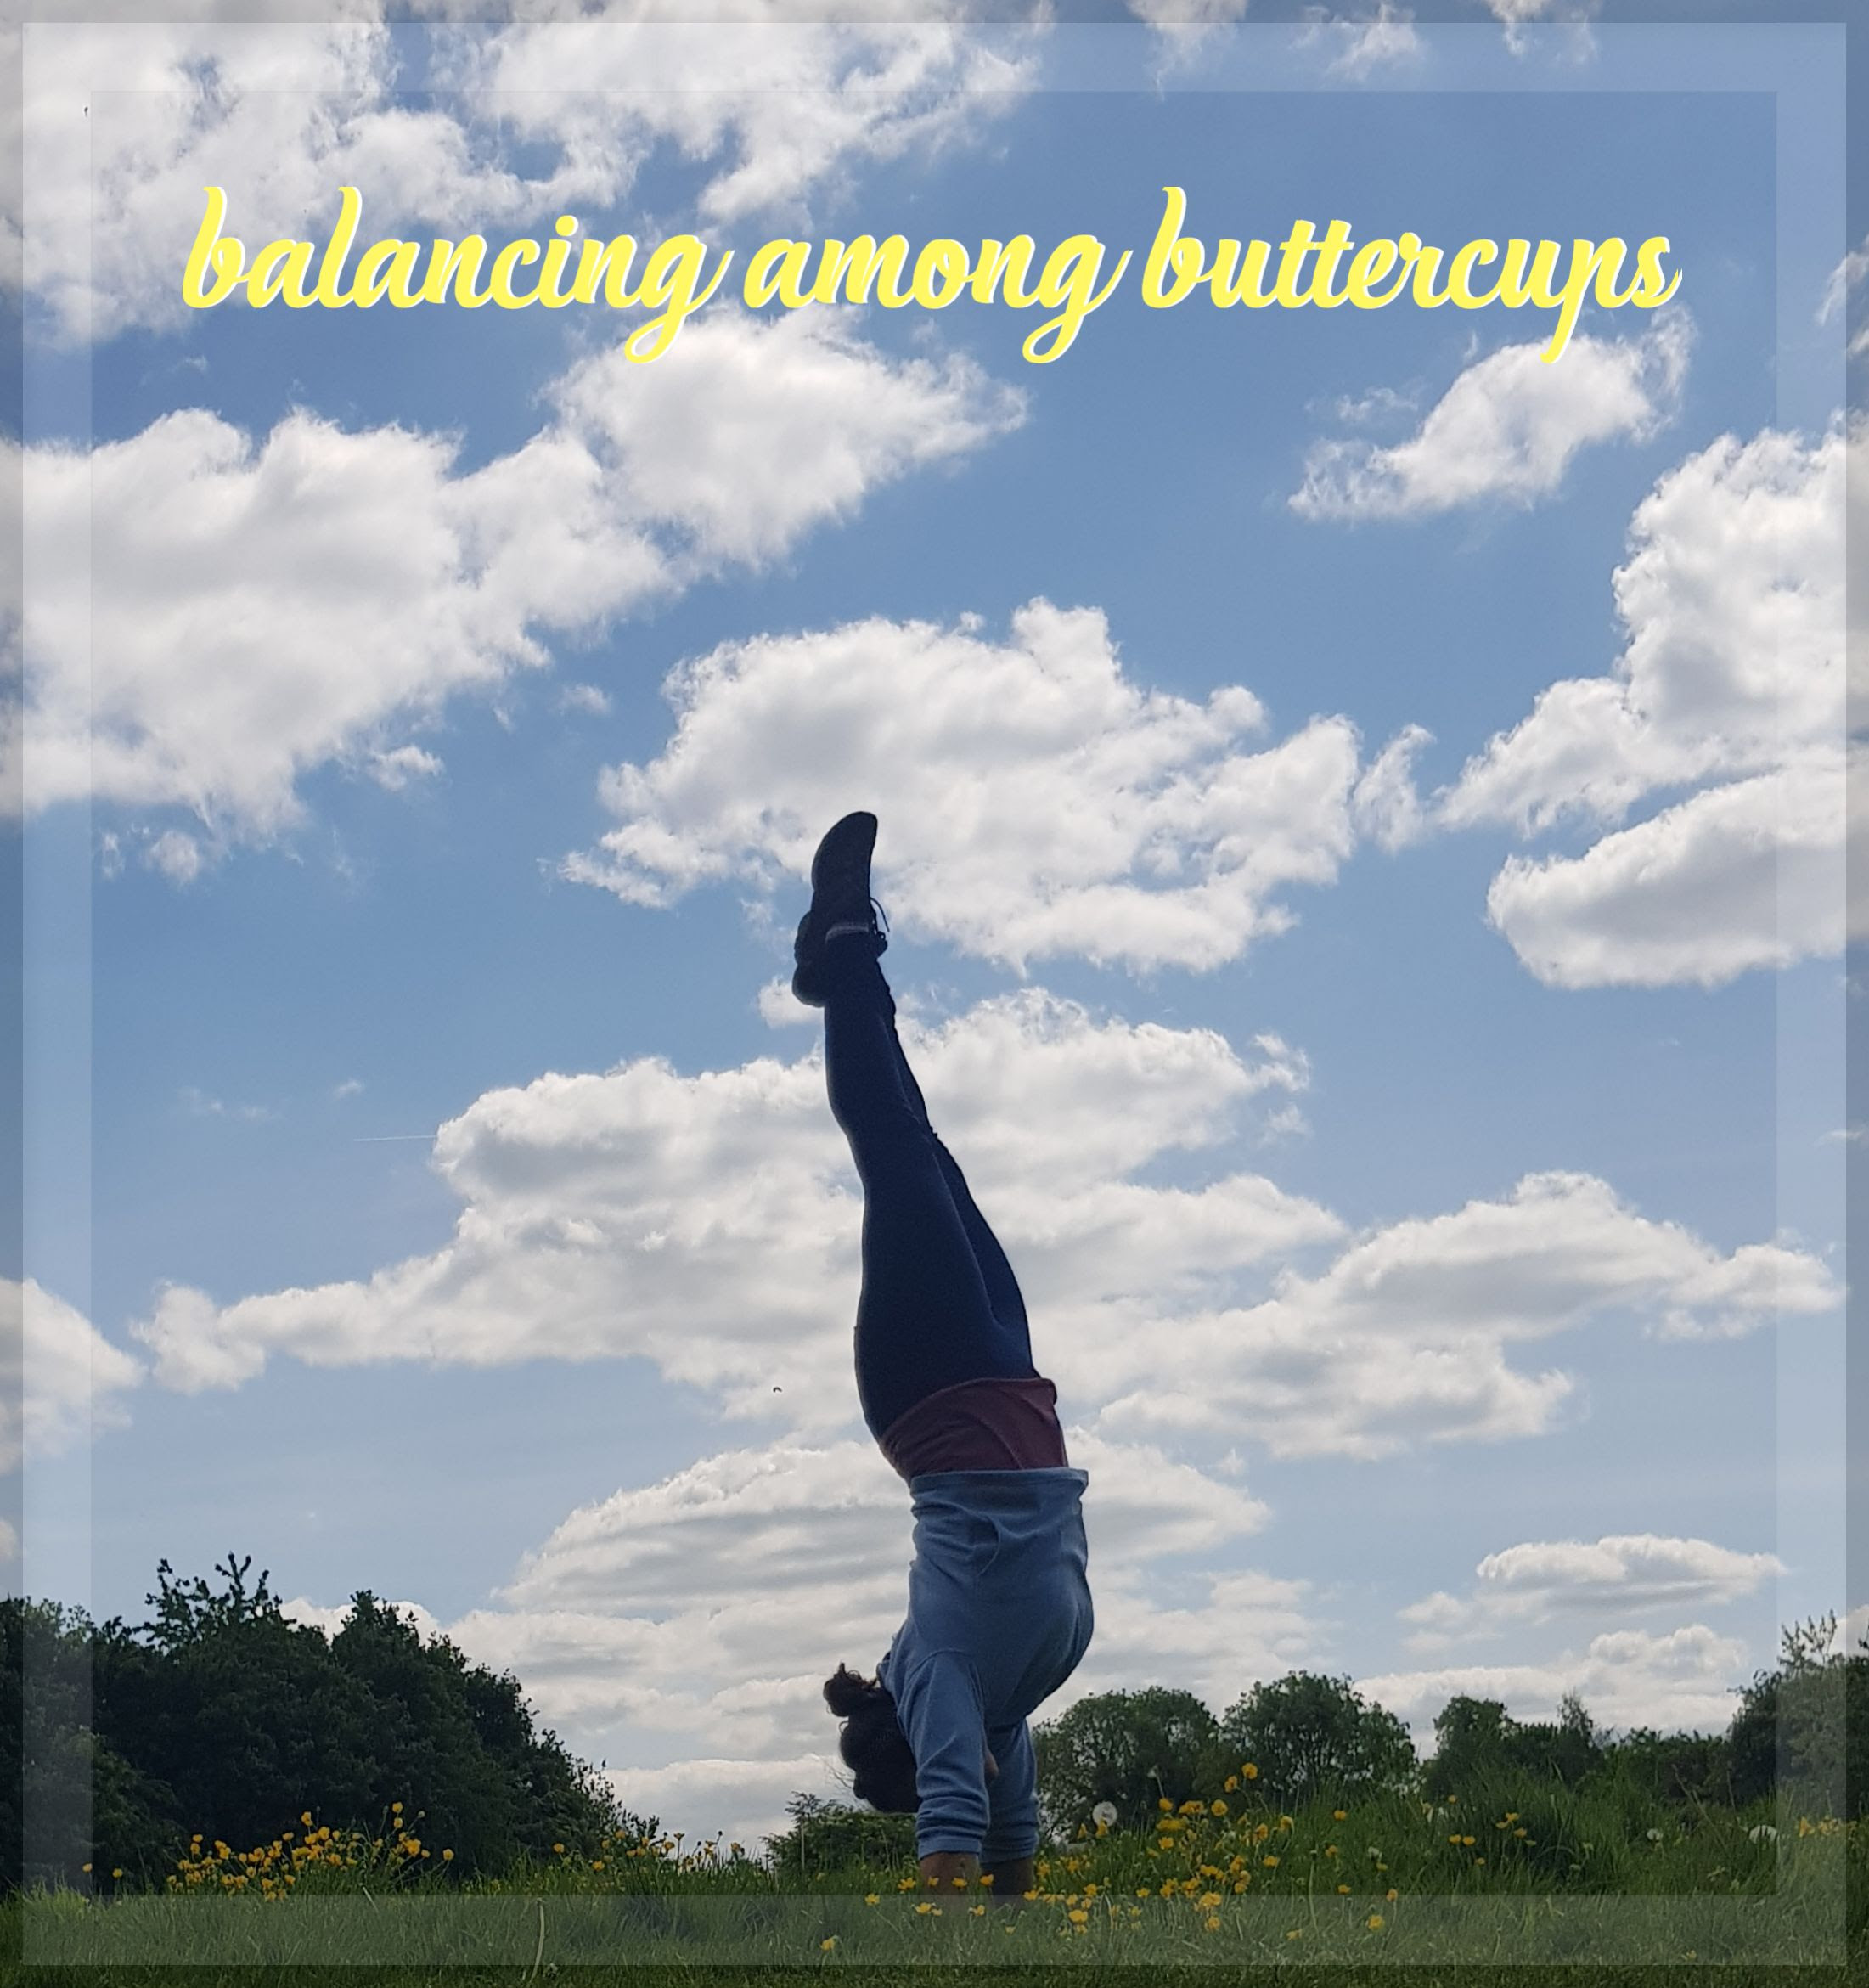 Julia balancing